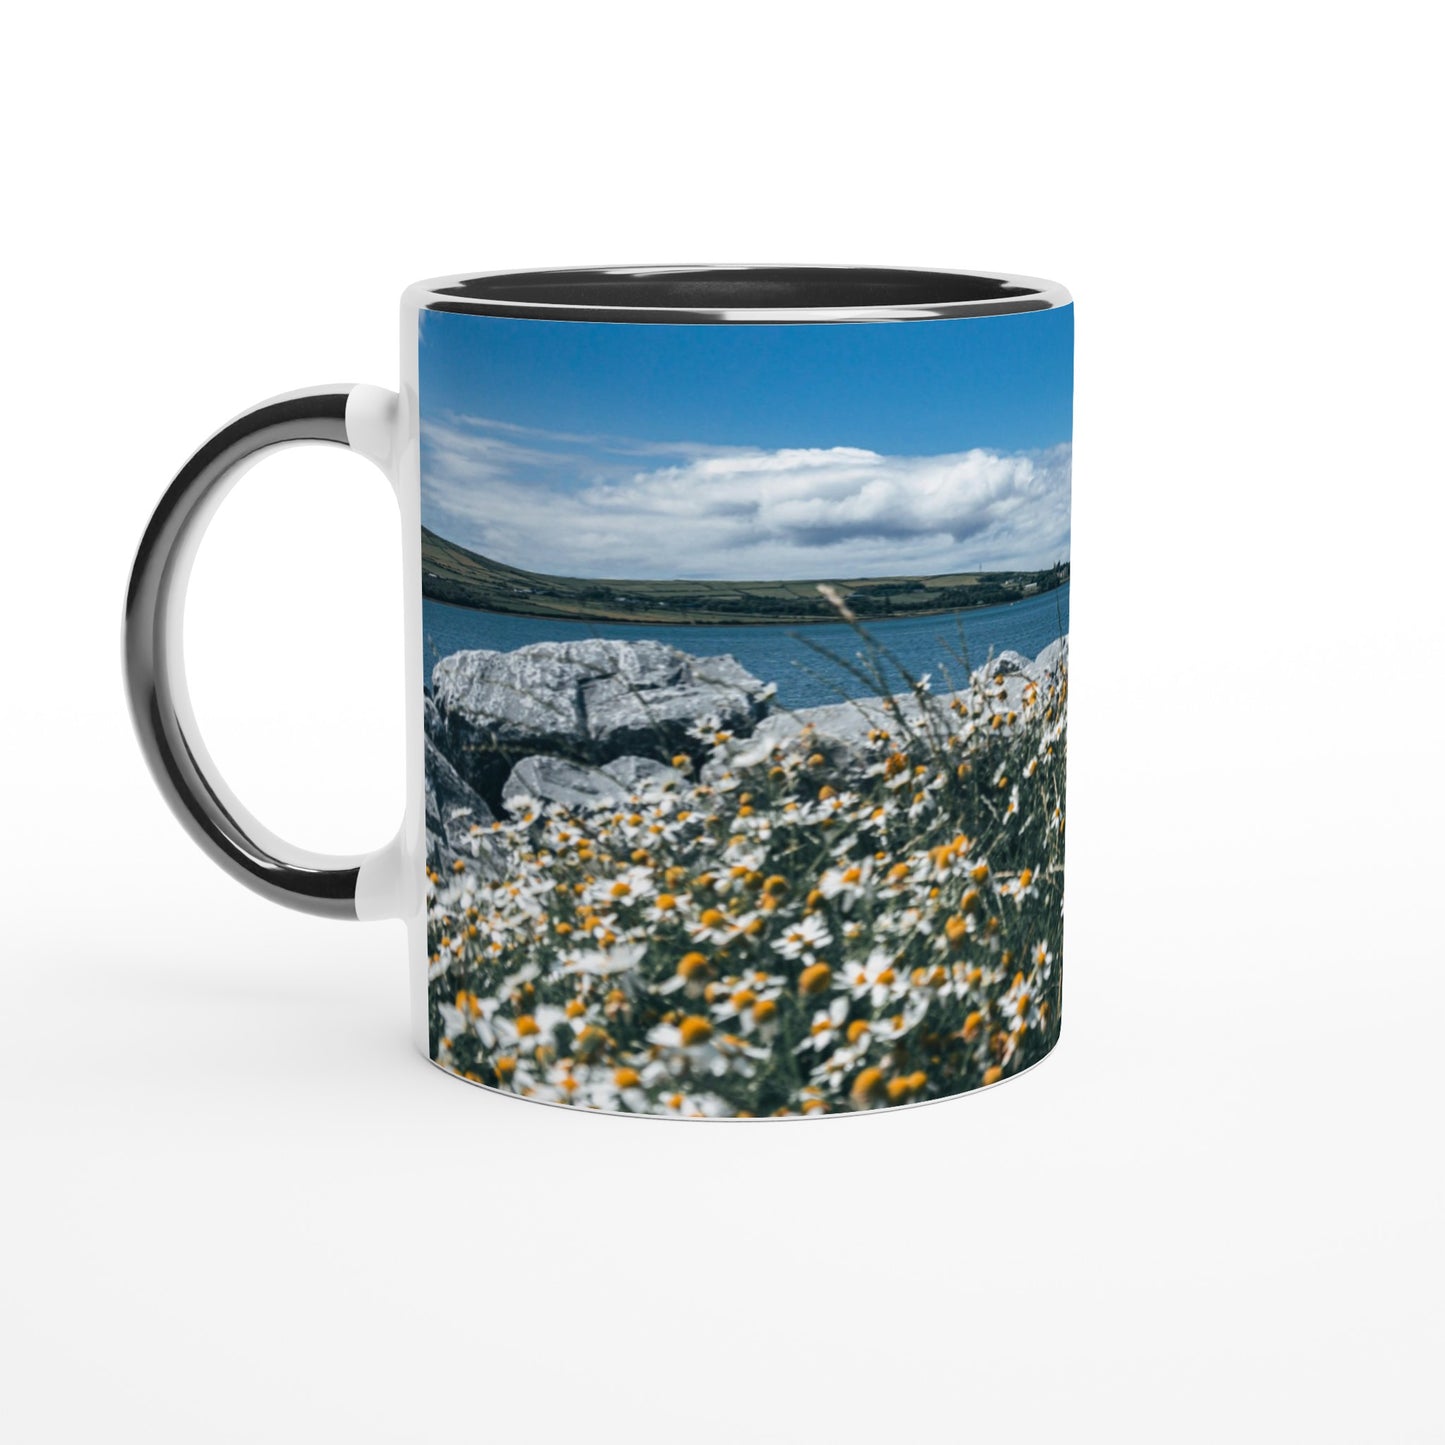 Flower magic on the seashore ceramic mug - various colors 